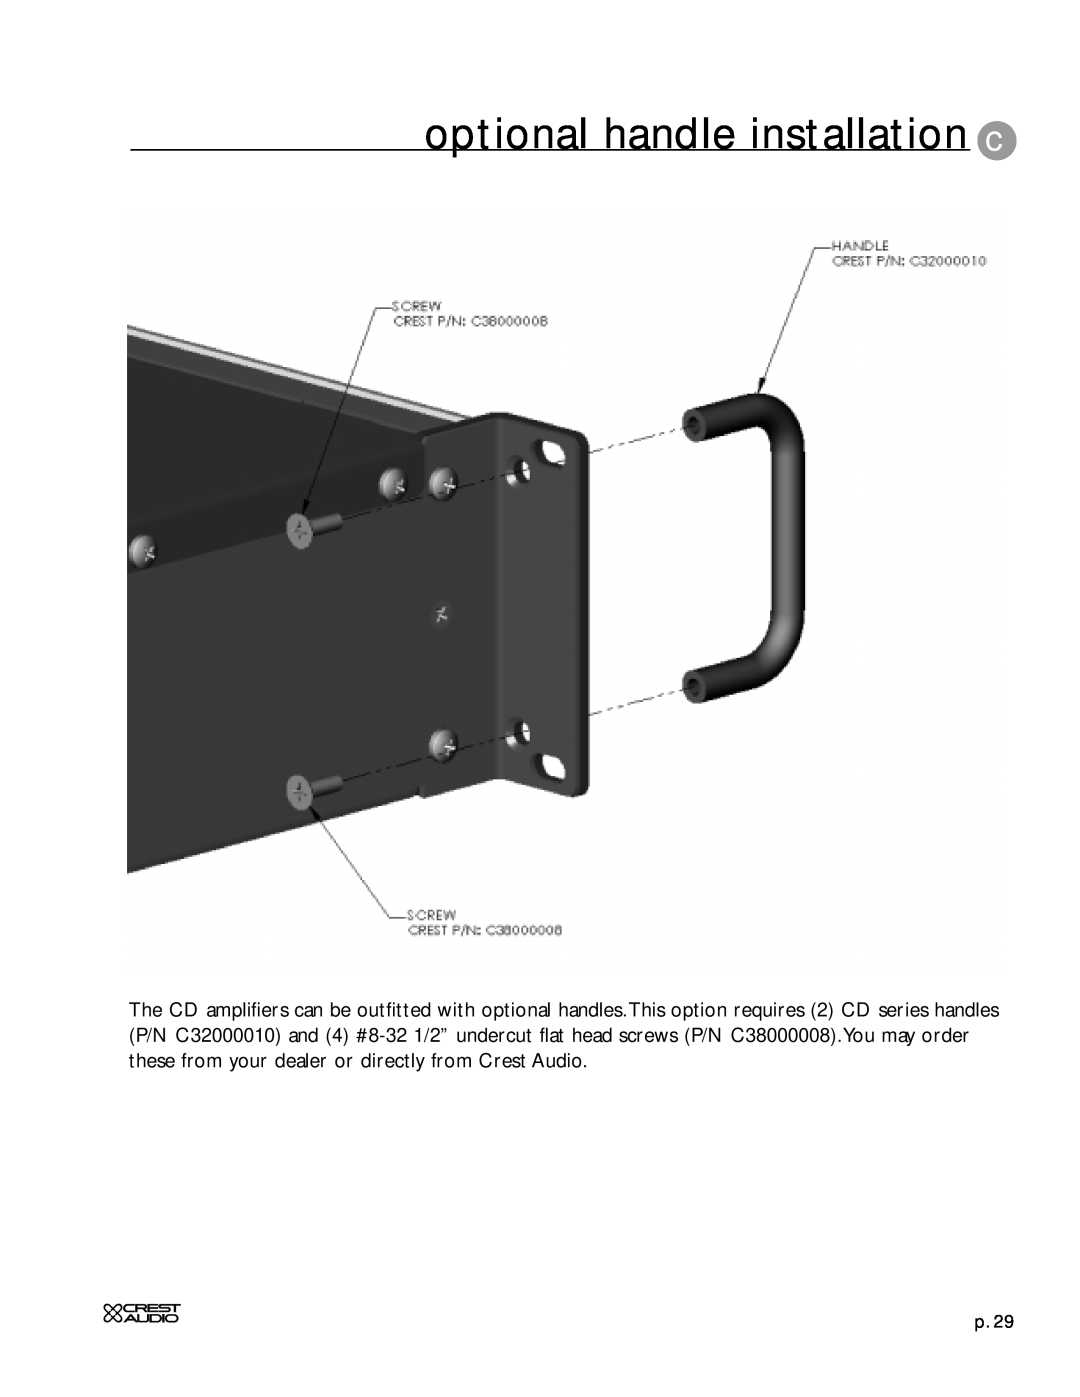 Peavey CD Series owner manual optional handle installation c, p.29 